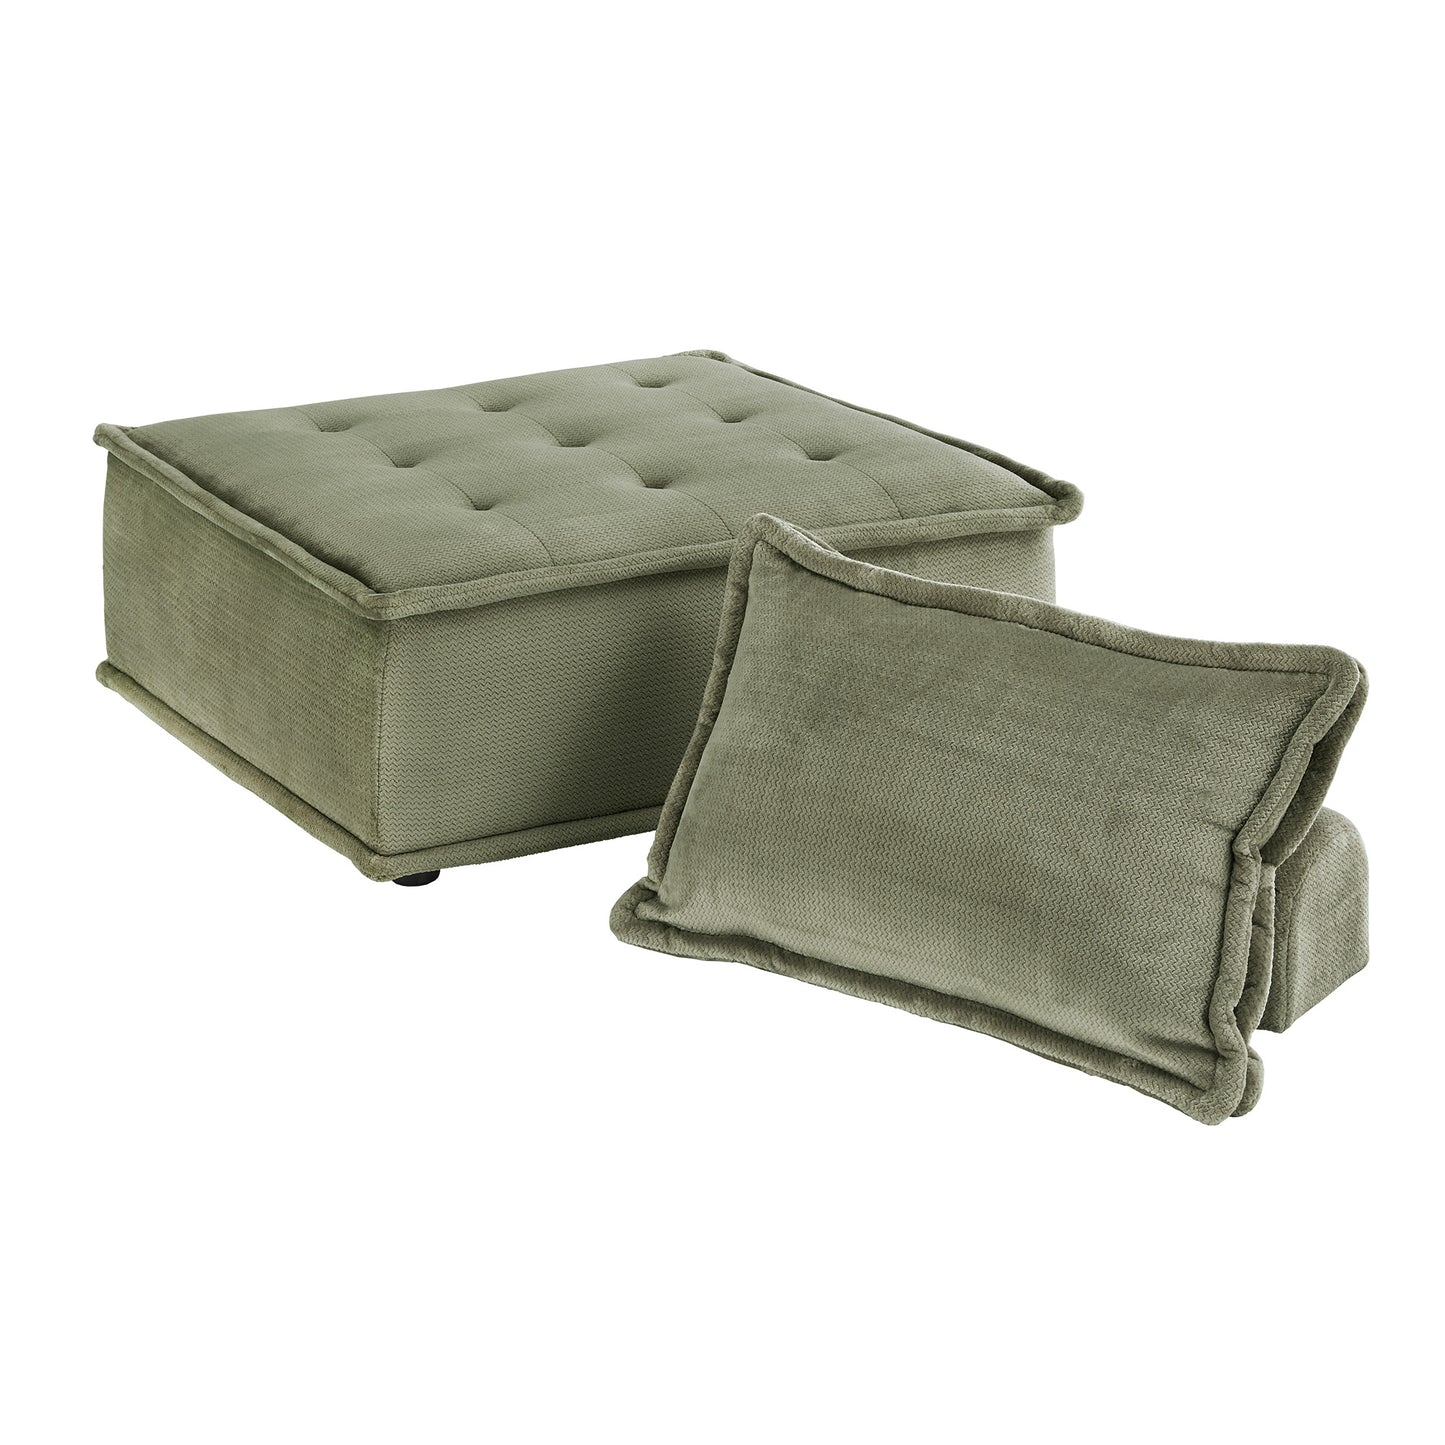 Velvet Tufted Modular Accent Chair with Pillow Back - Moss Green